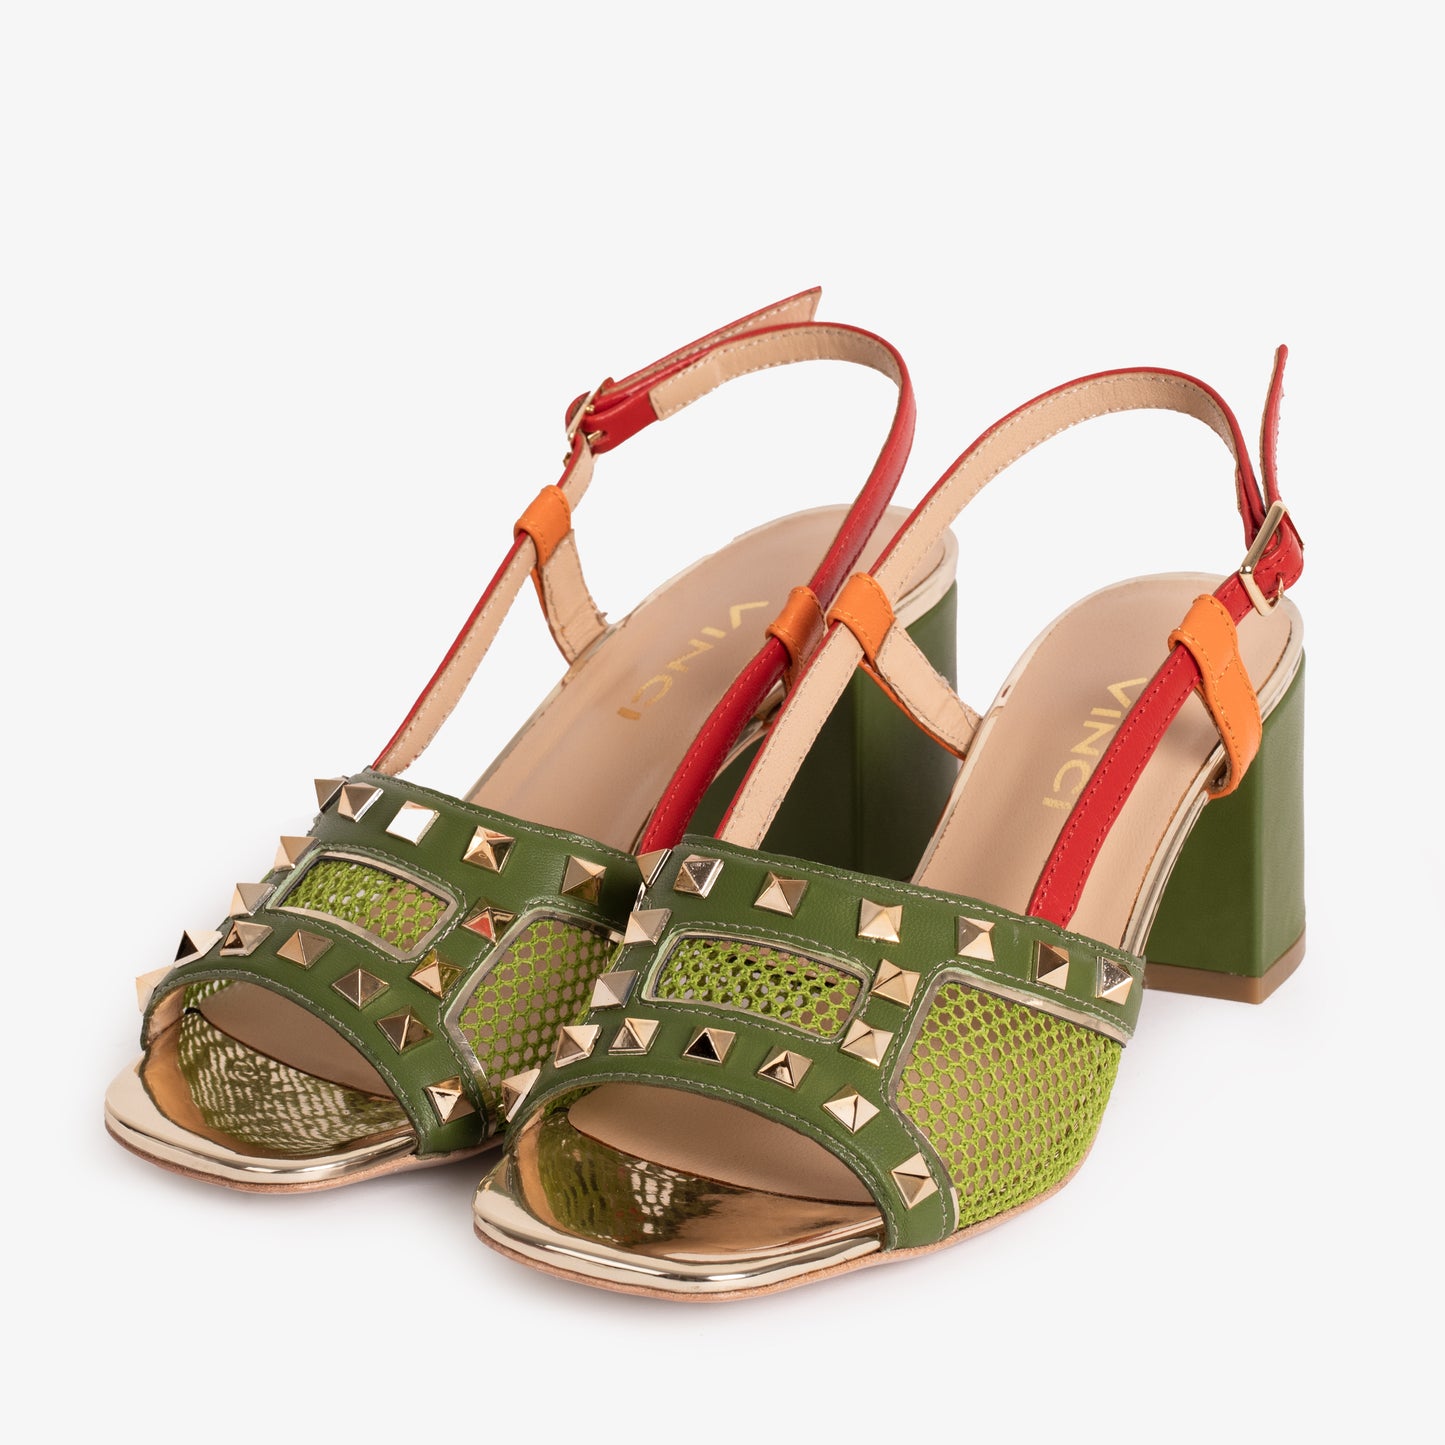 The Linea Green Leather Women Slingback Shoe